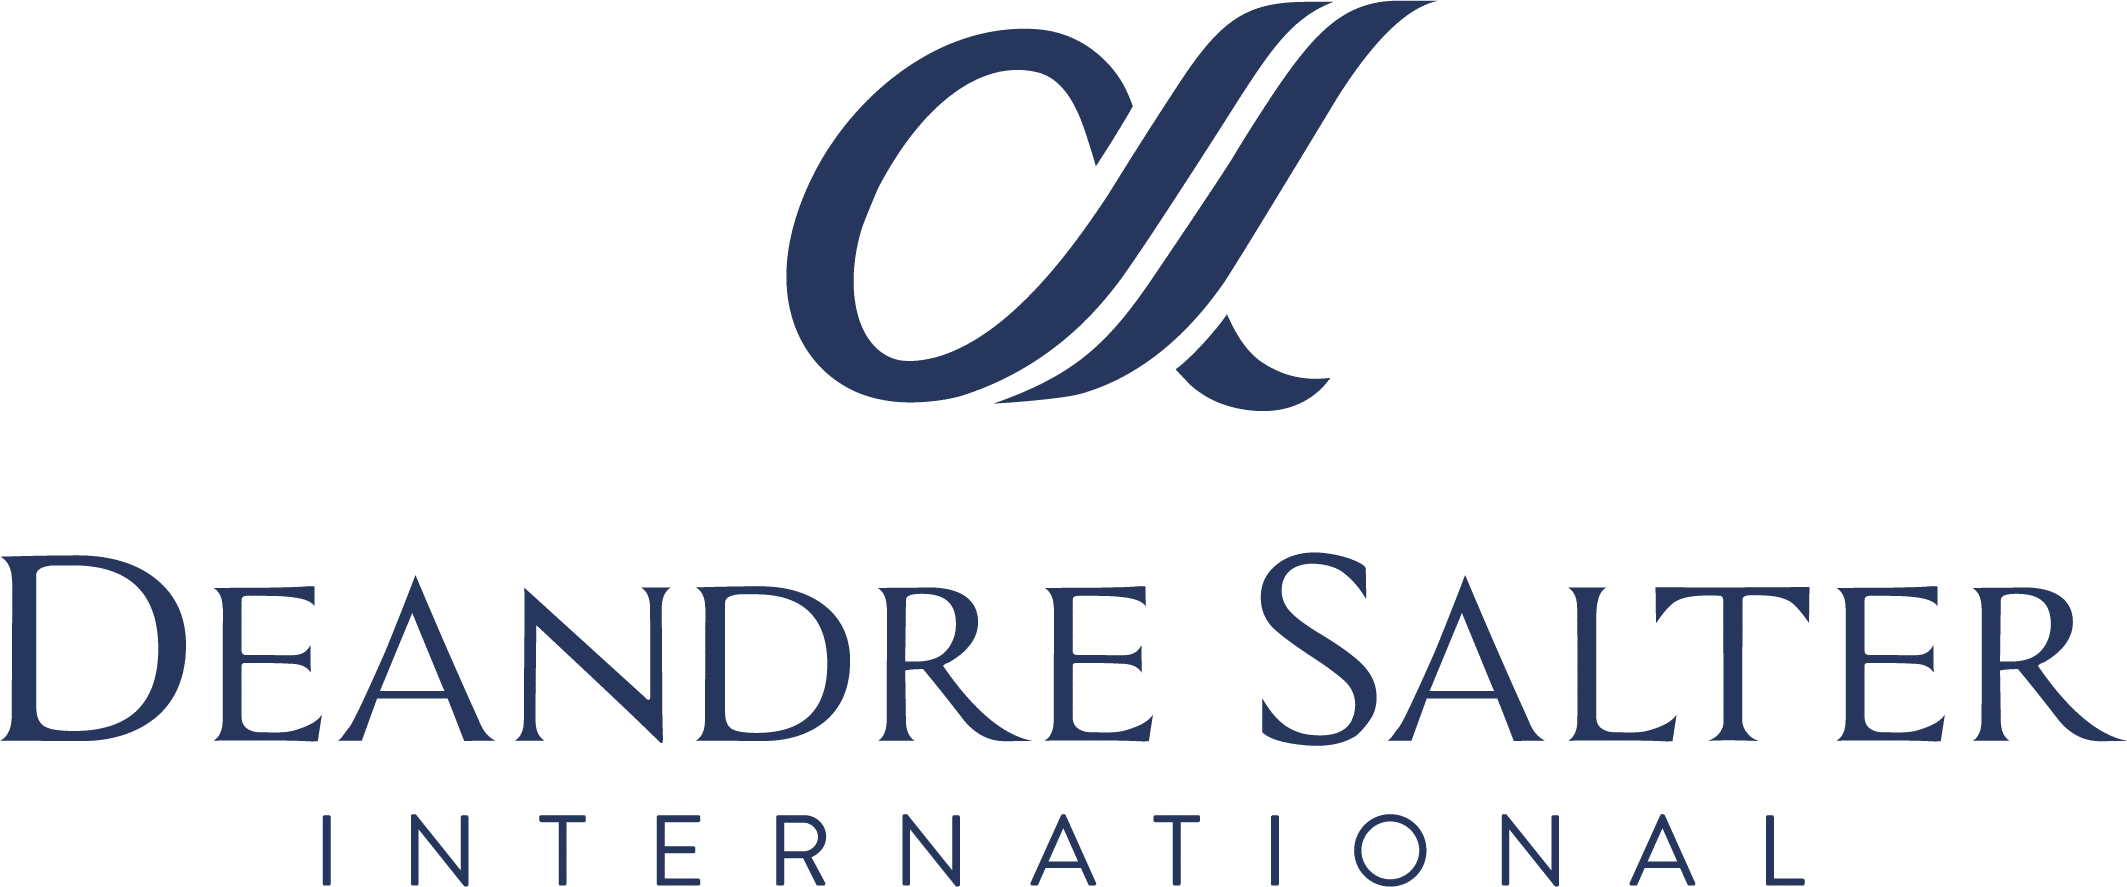 Deandre Salter International Logo Dark Blue